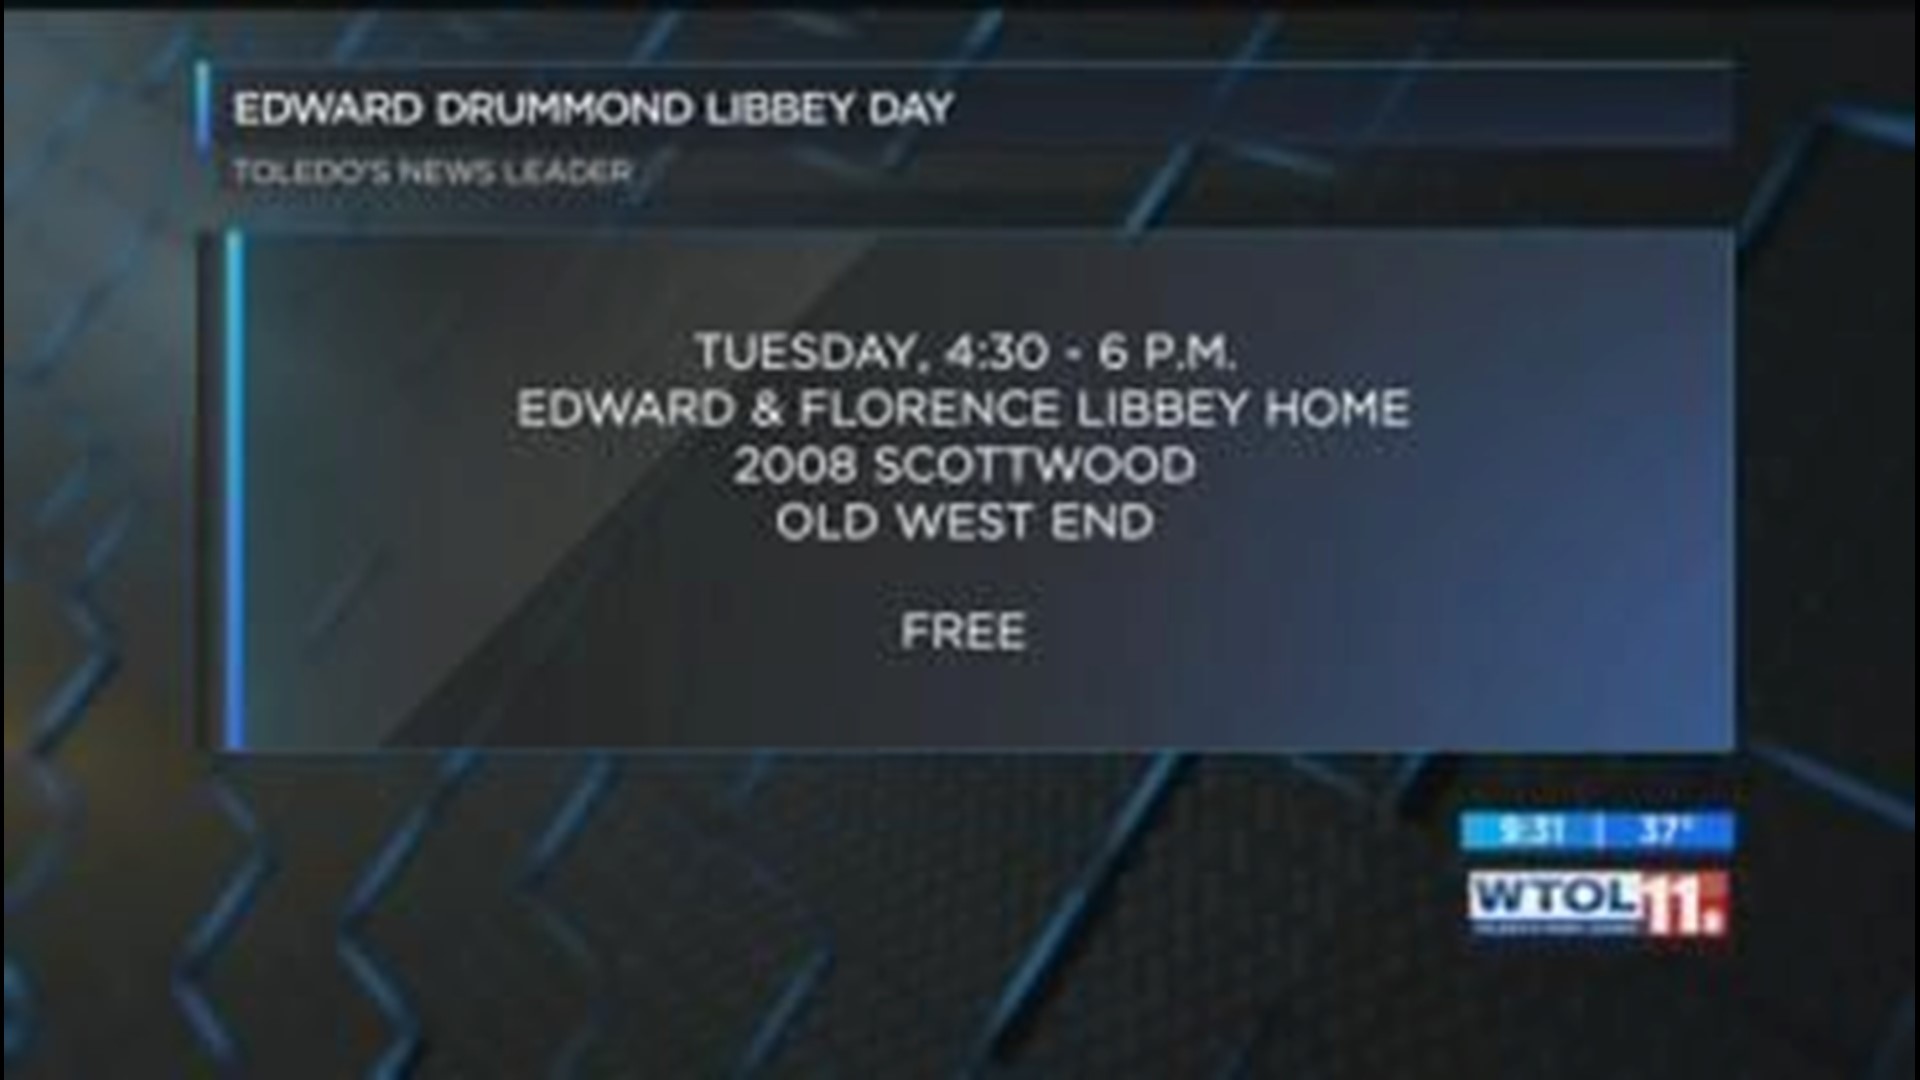 Celebrate Edward Drummond Libbey Day on Tuesday